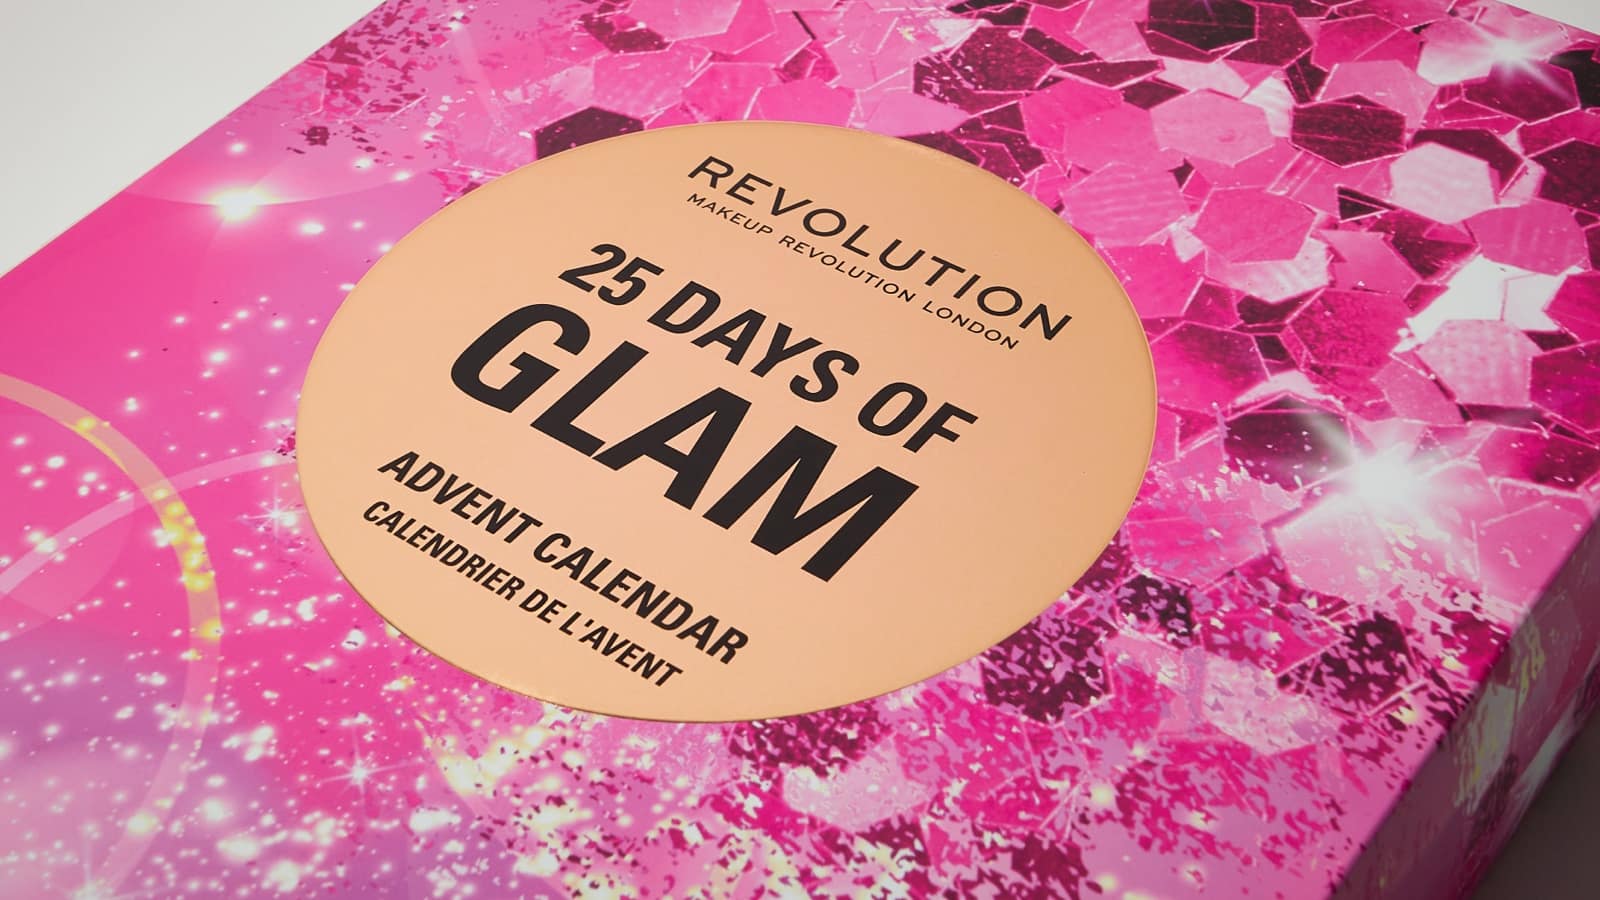 Inside the £40 Revolution 25 Days of Glam beauty advent calendar